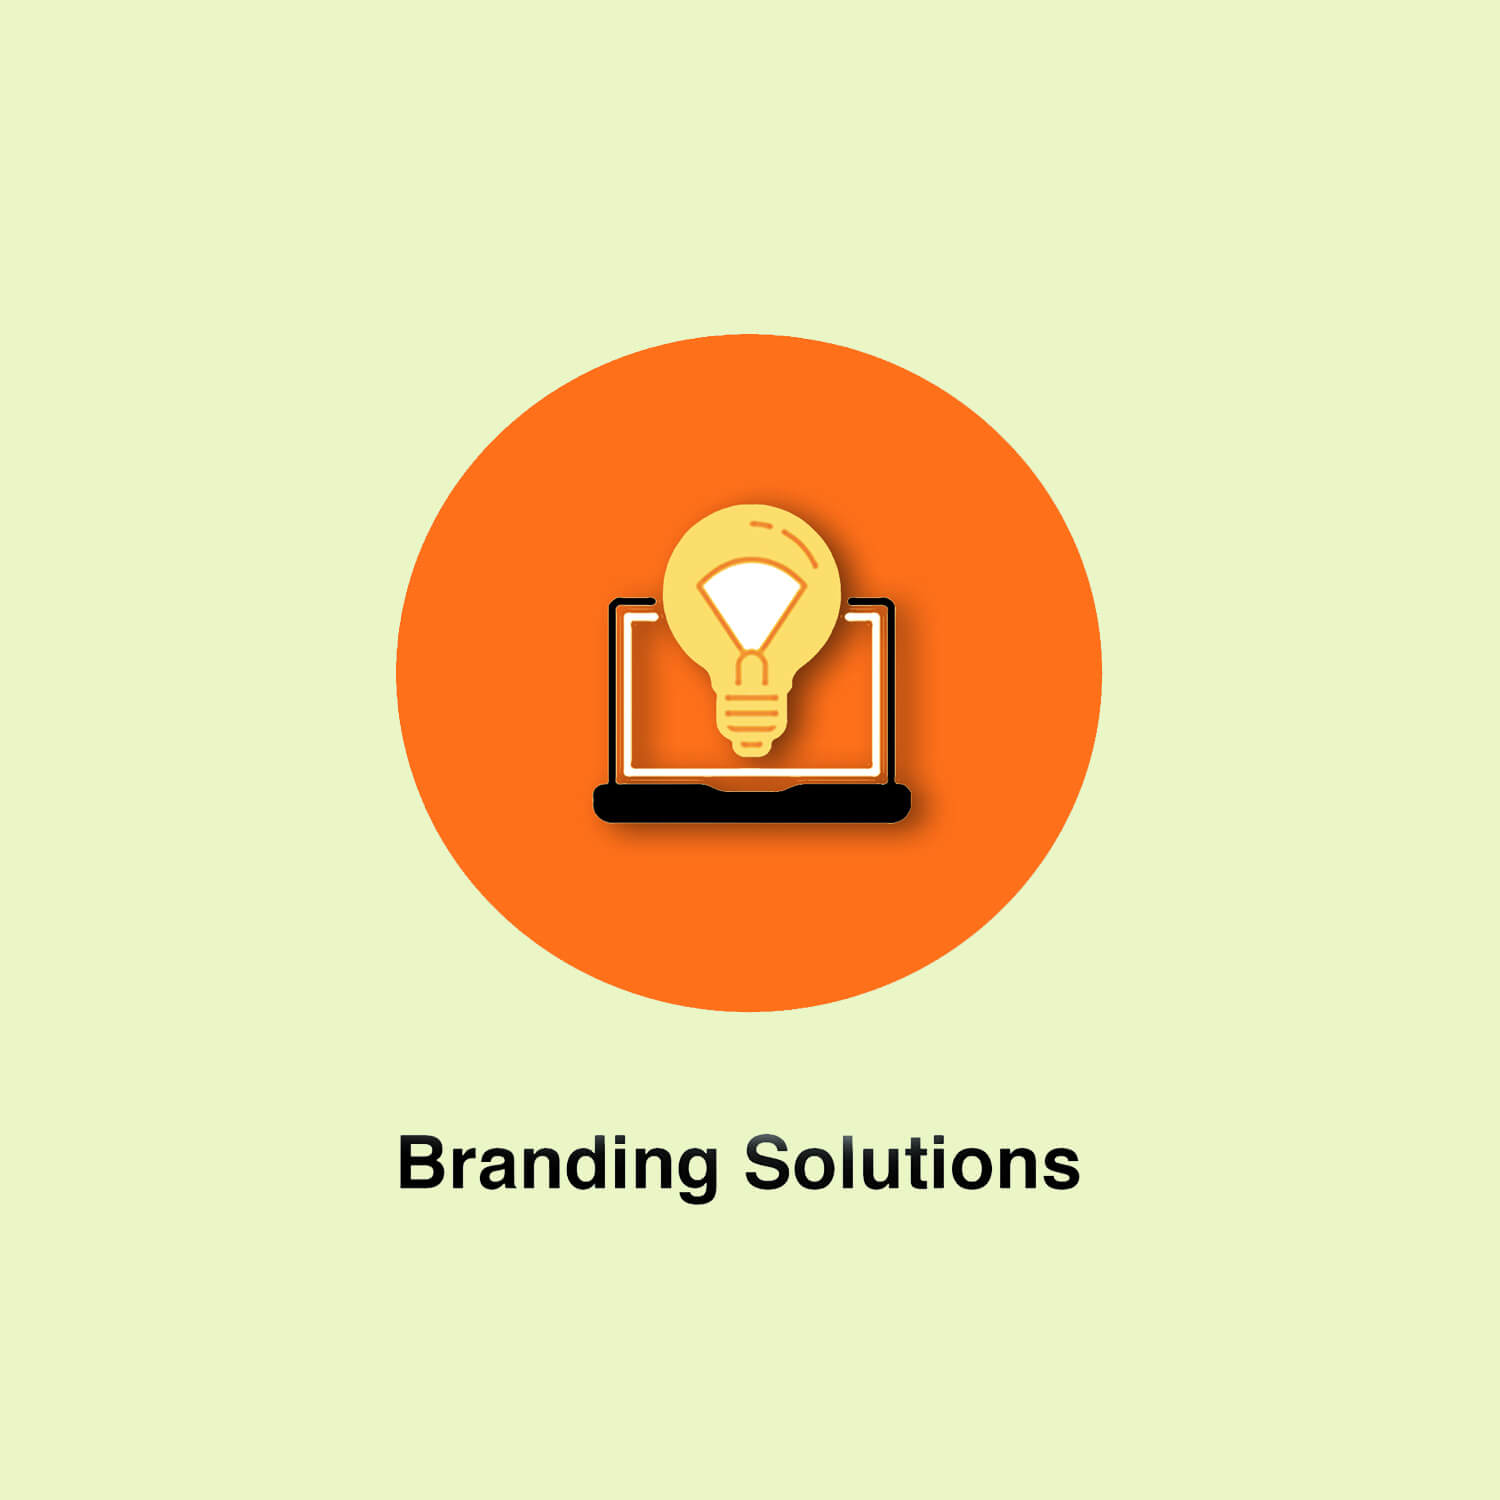 Branding solutions